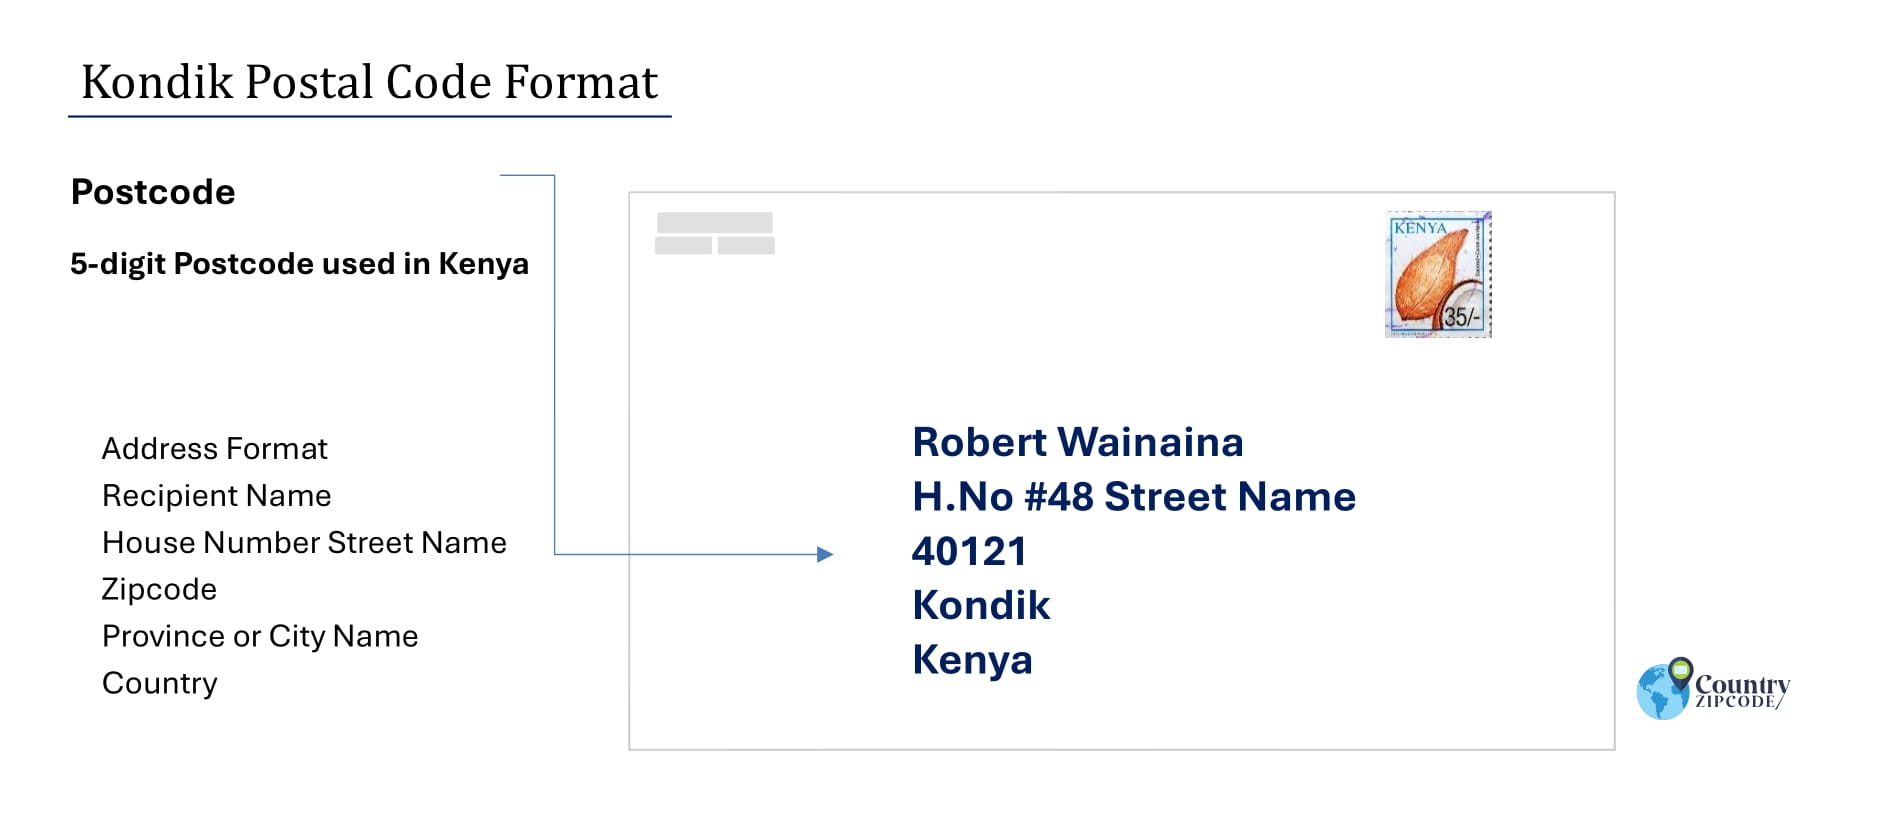 Example of Kondik Address and postal code format